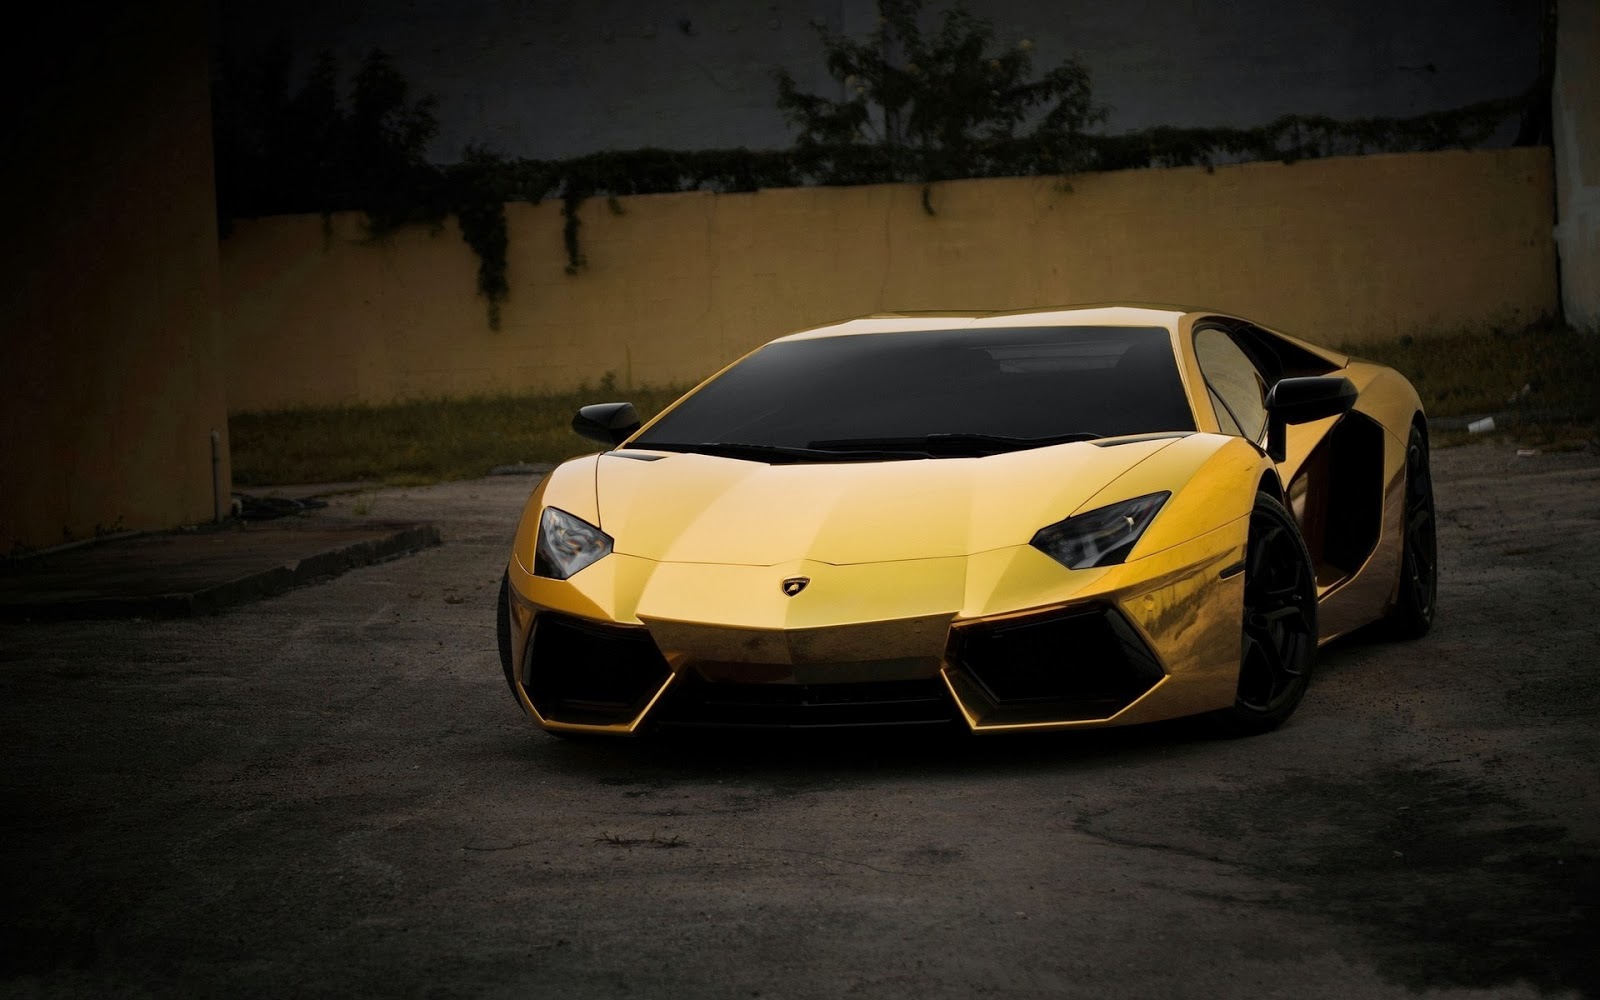 Gold Lamborghini Aventador Exterior Images  Just Welcome 